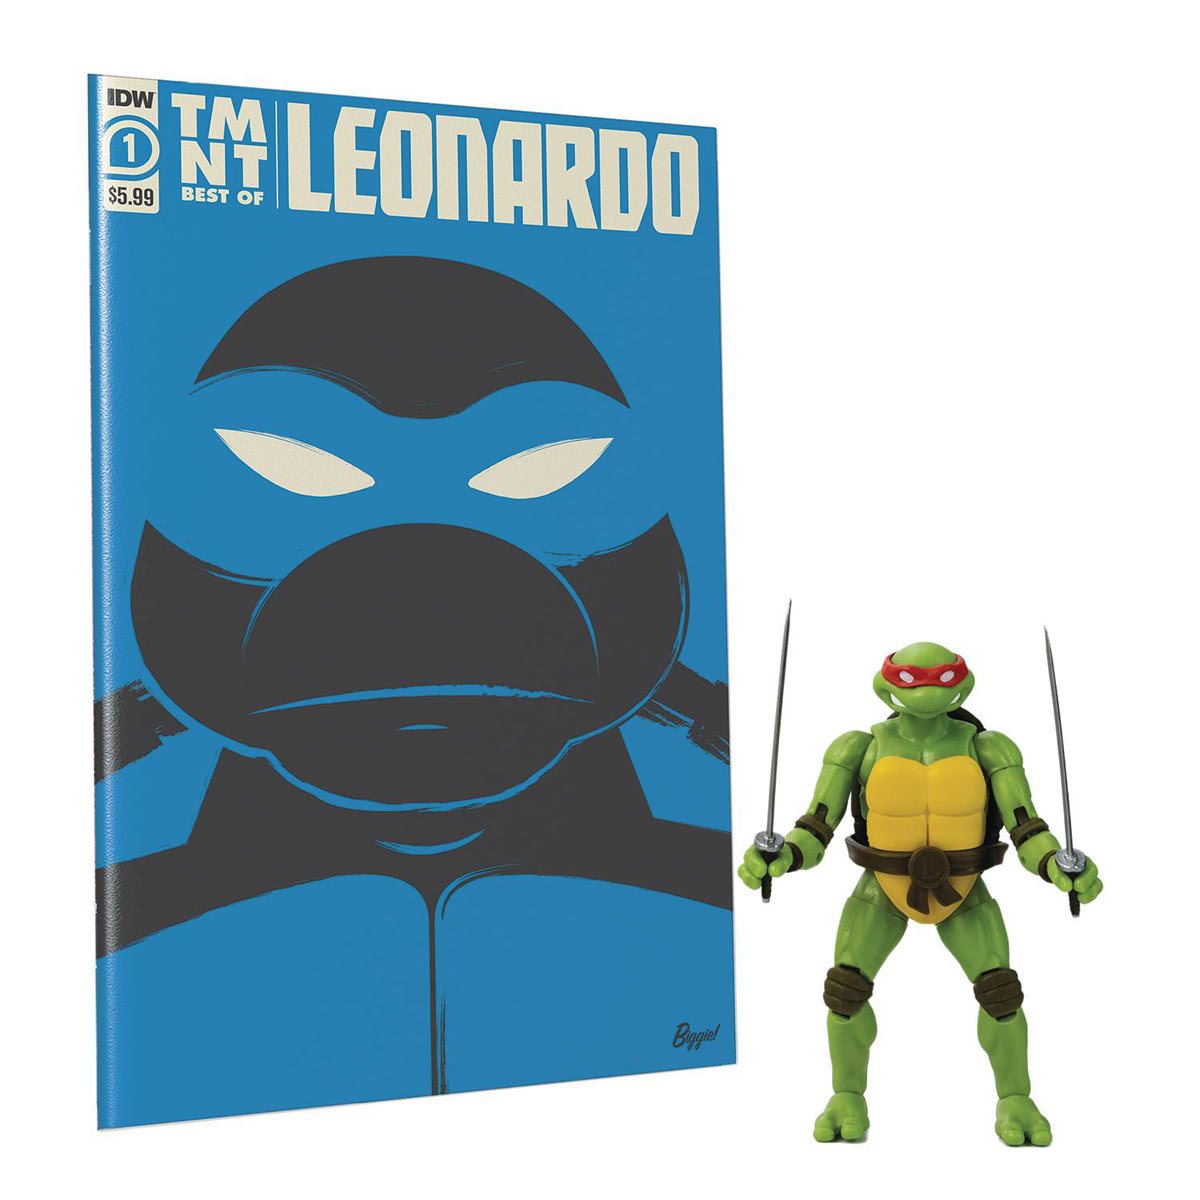 Leonardo Teenage Mutant Ninja Turtle Comic Book in Very Fine